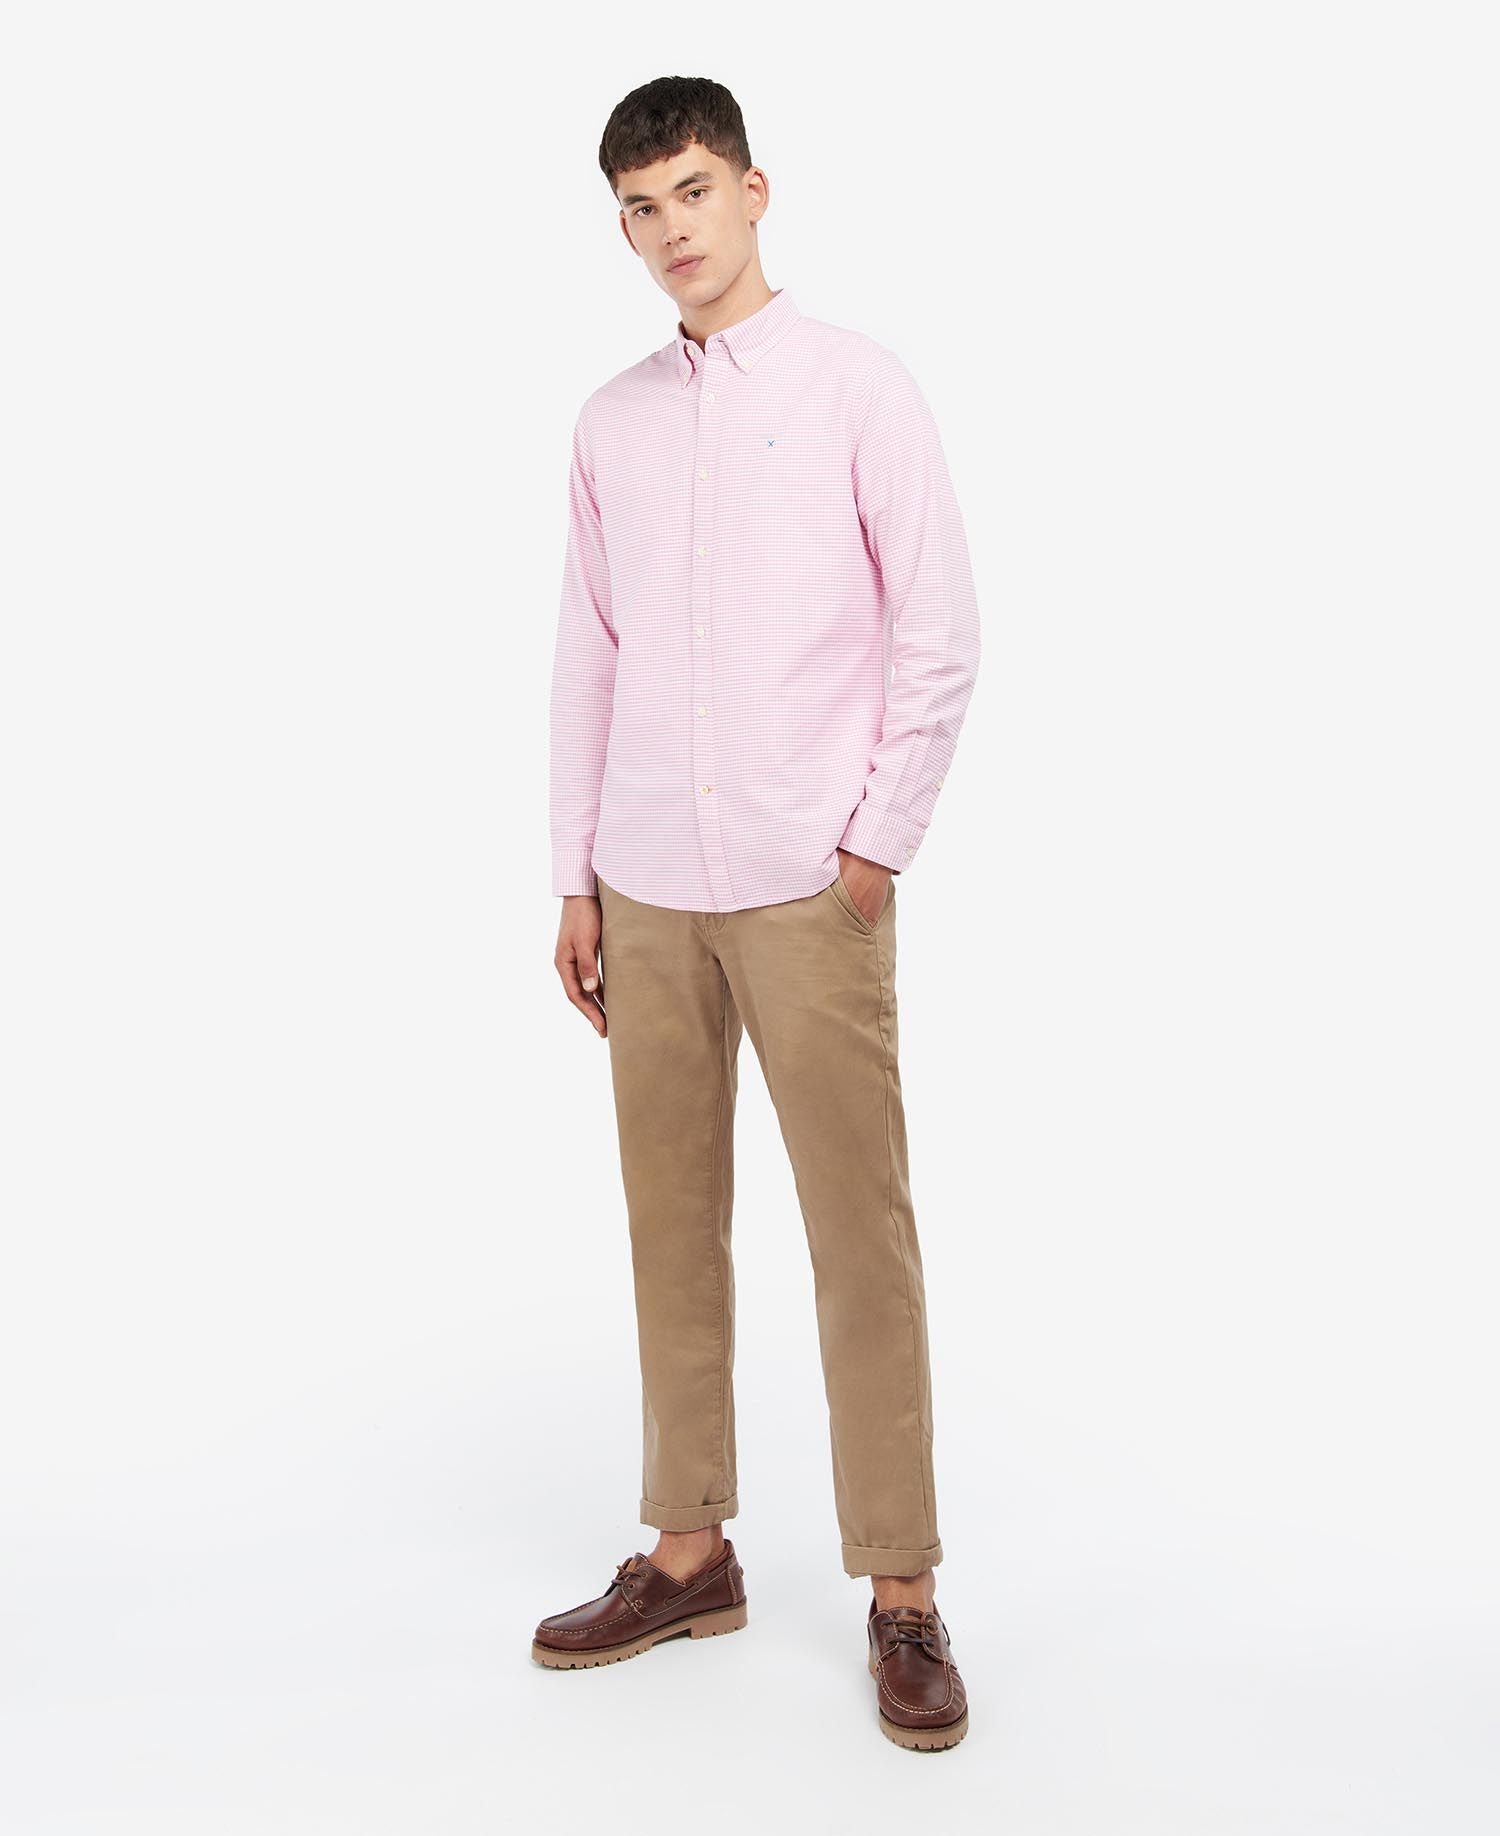 Men's Gingham Oxtown Tailored Shirt - Pink